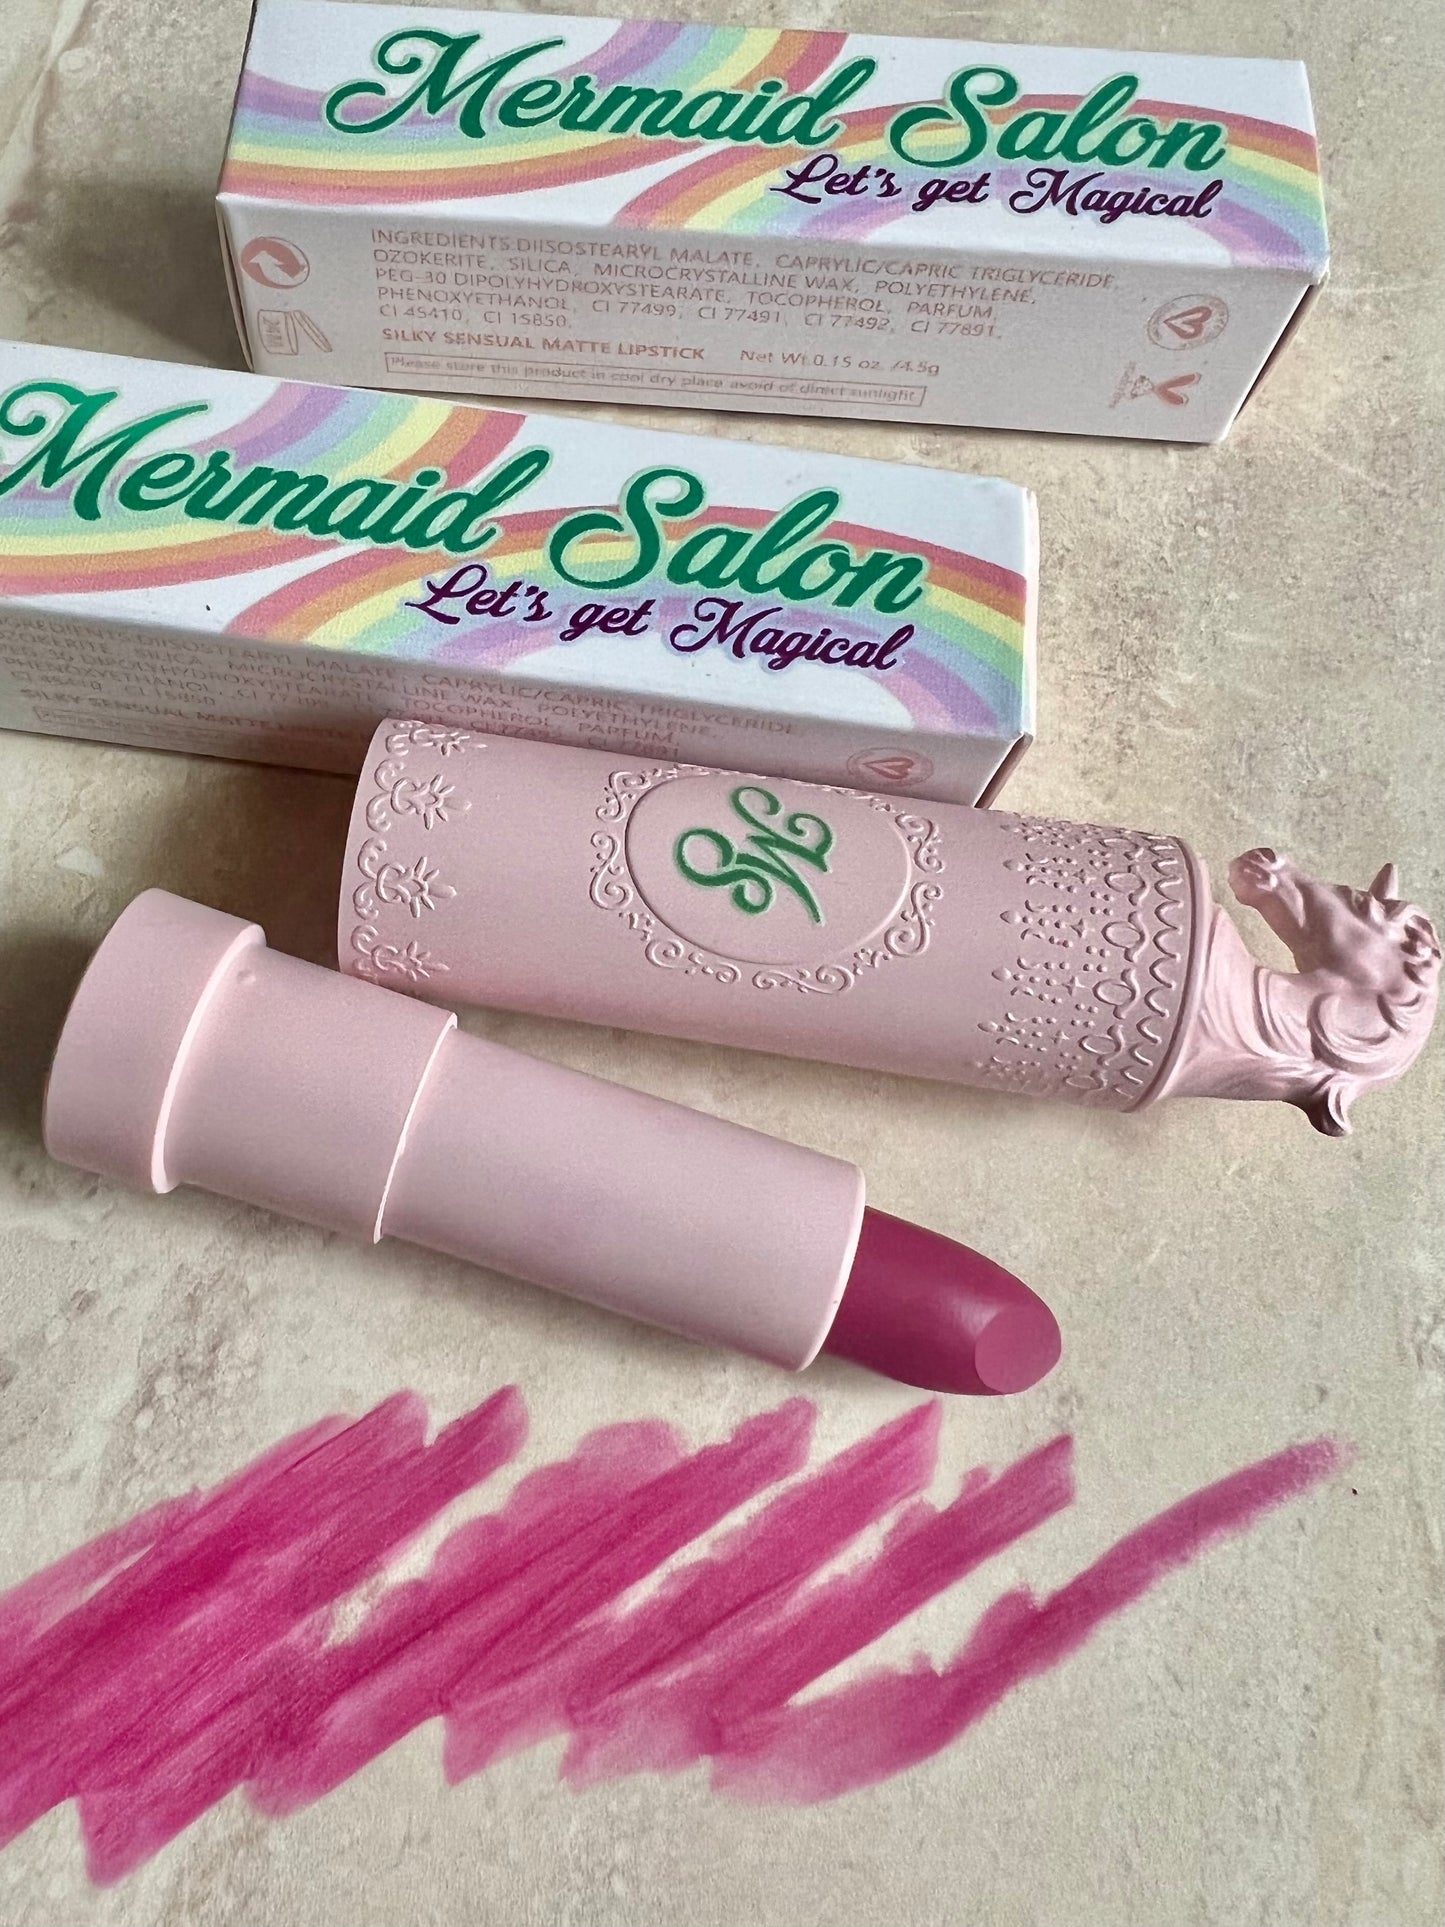 ABRA CADABRA - Traditional Cream Velvet lipstick